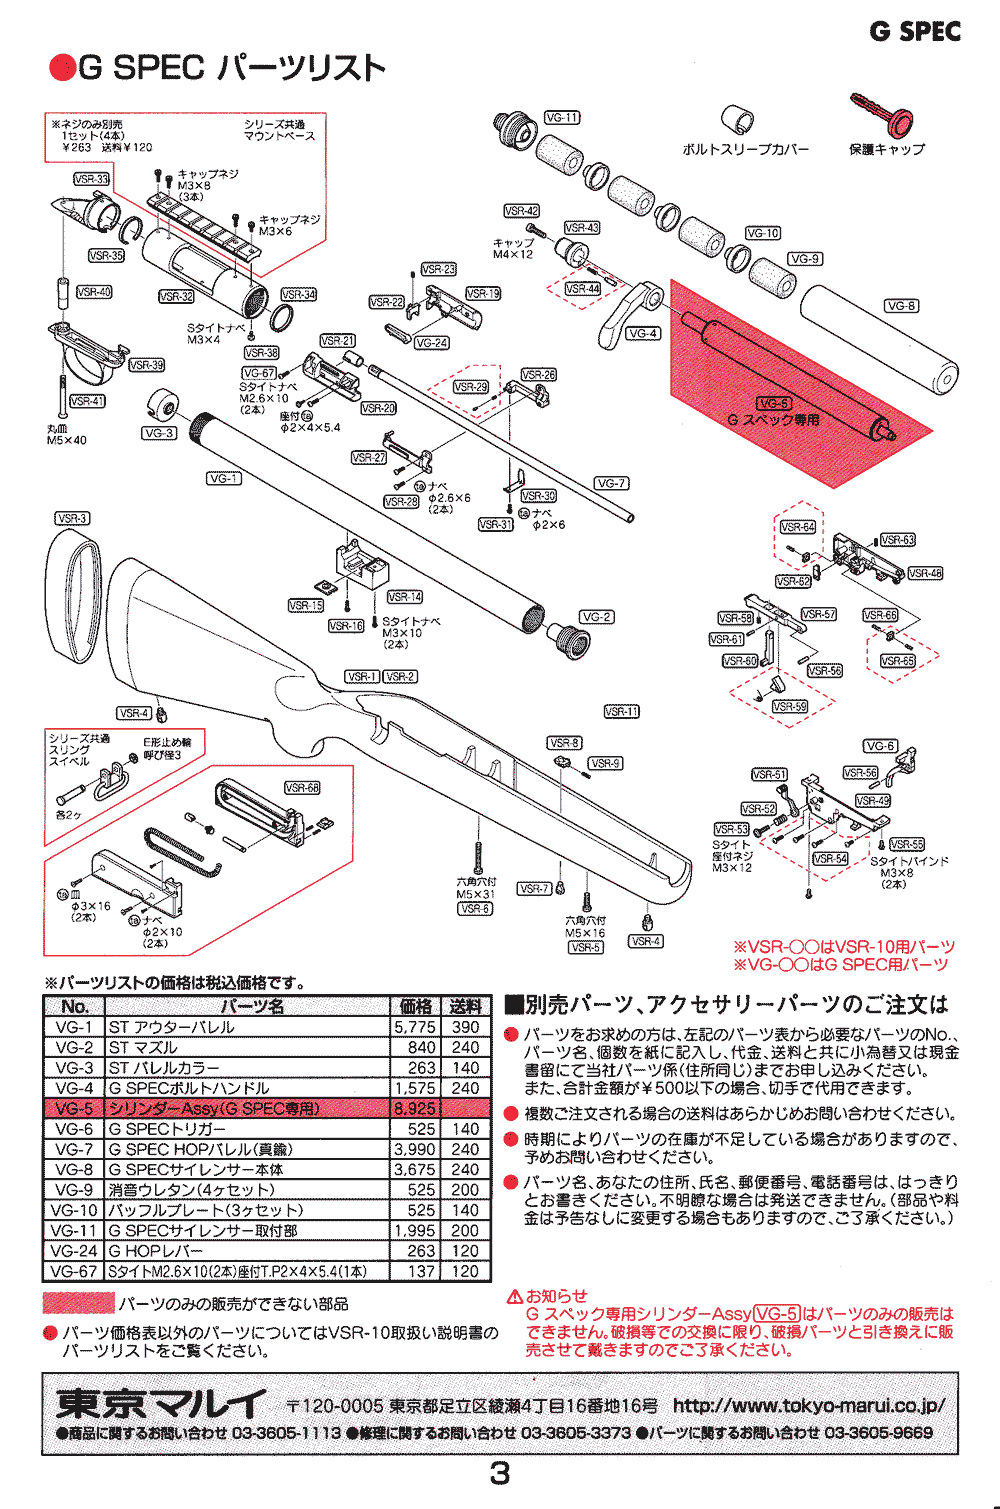 VSR-10 Gスペック 東京マルイ エアガンレビュー